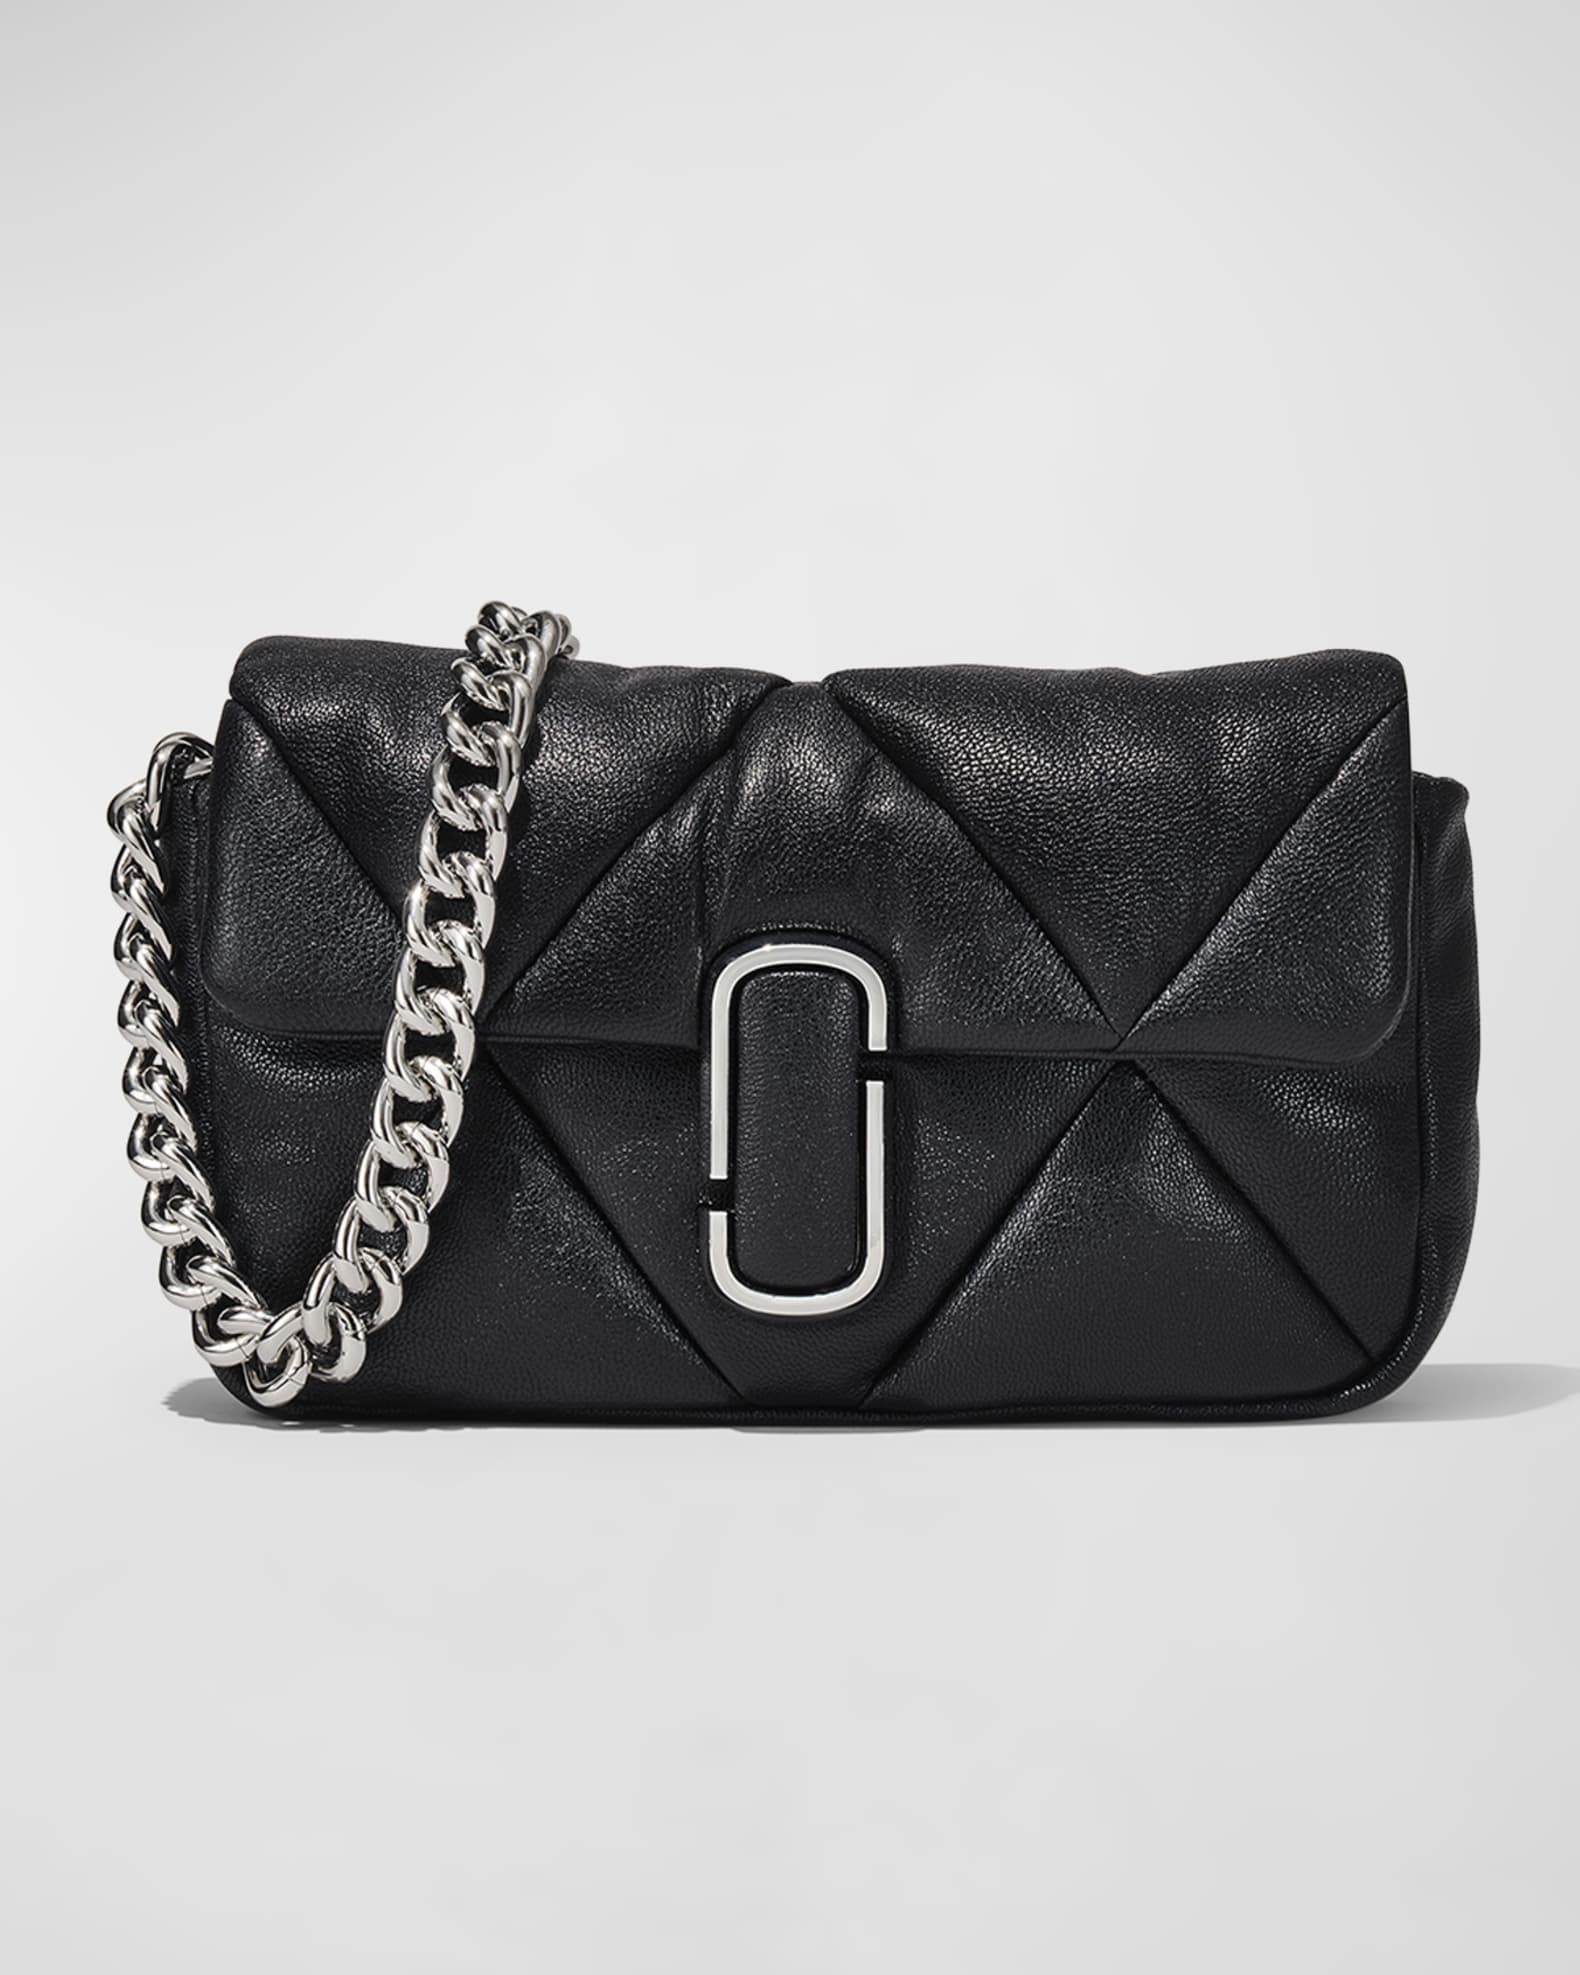 Marc Jacobs - Women's The J Marc Shoulder Bag - Black - Leather